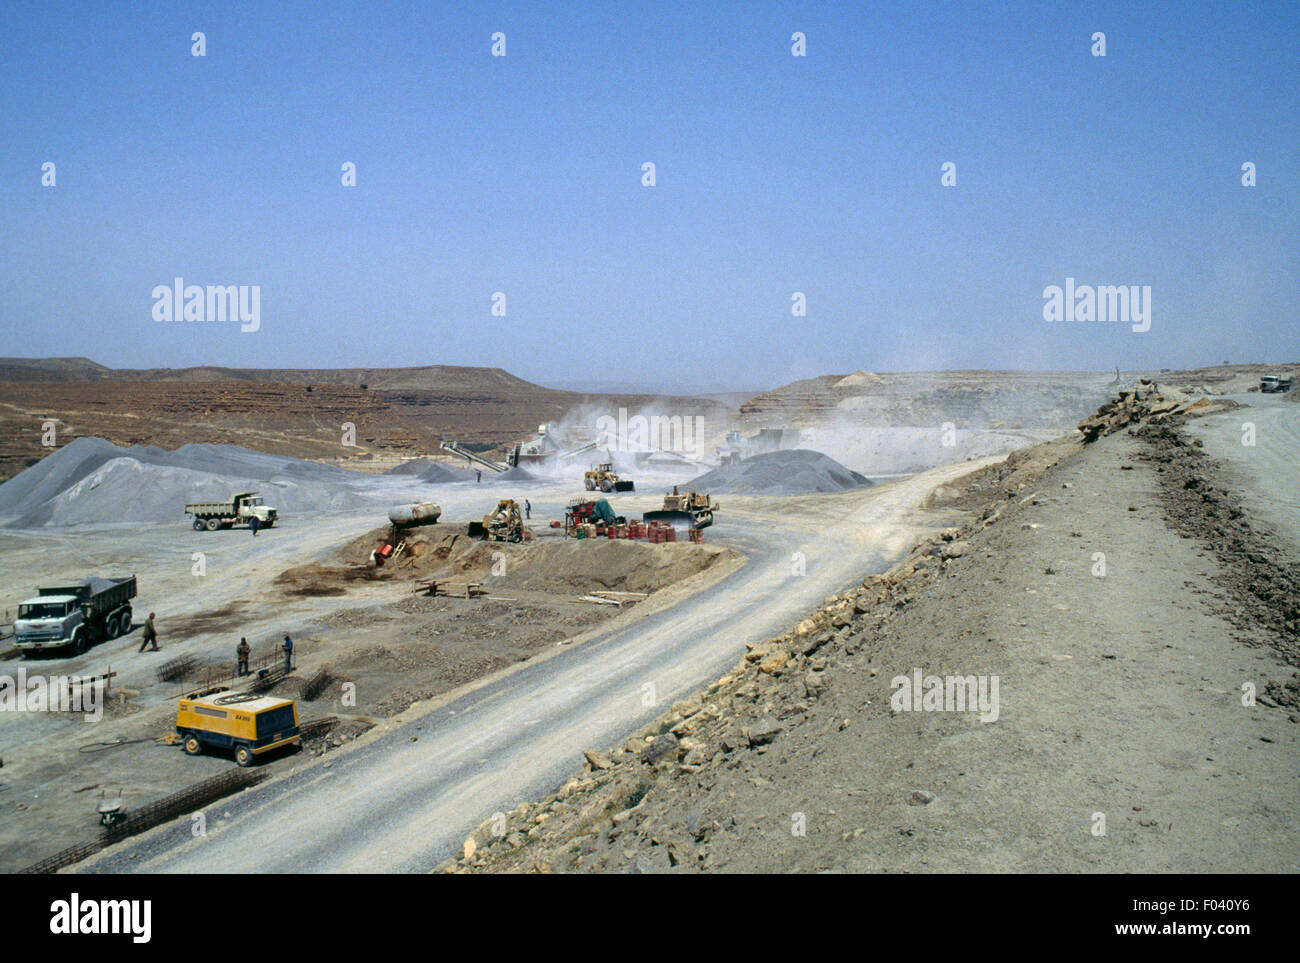 Lavori stradali, Atlante, Algeria. Foto Stock